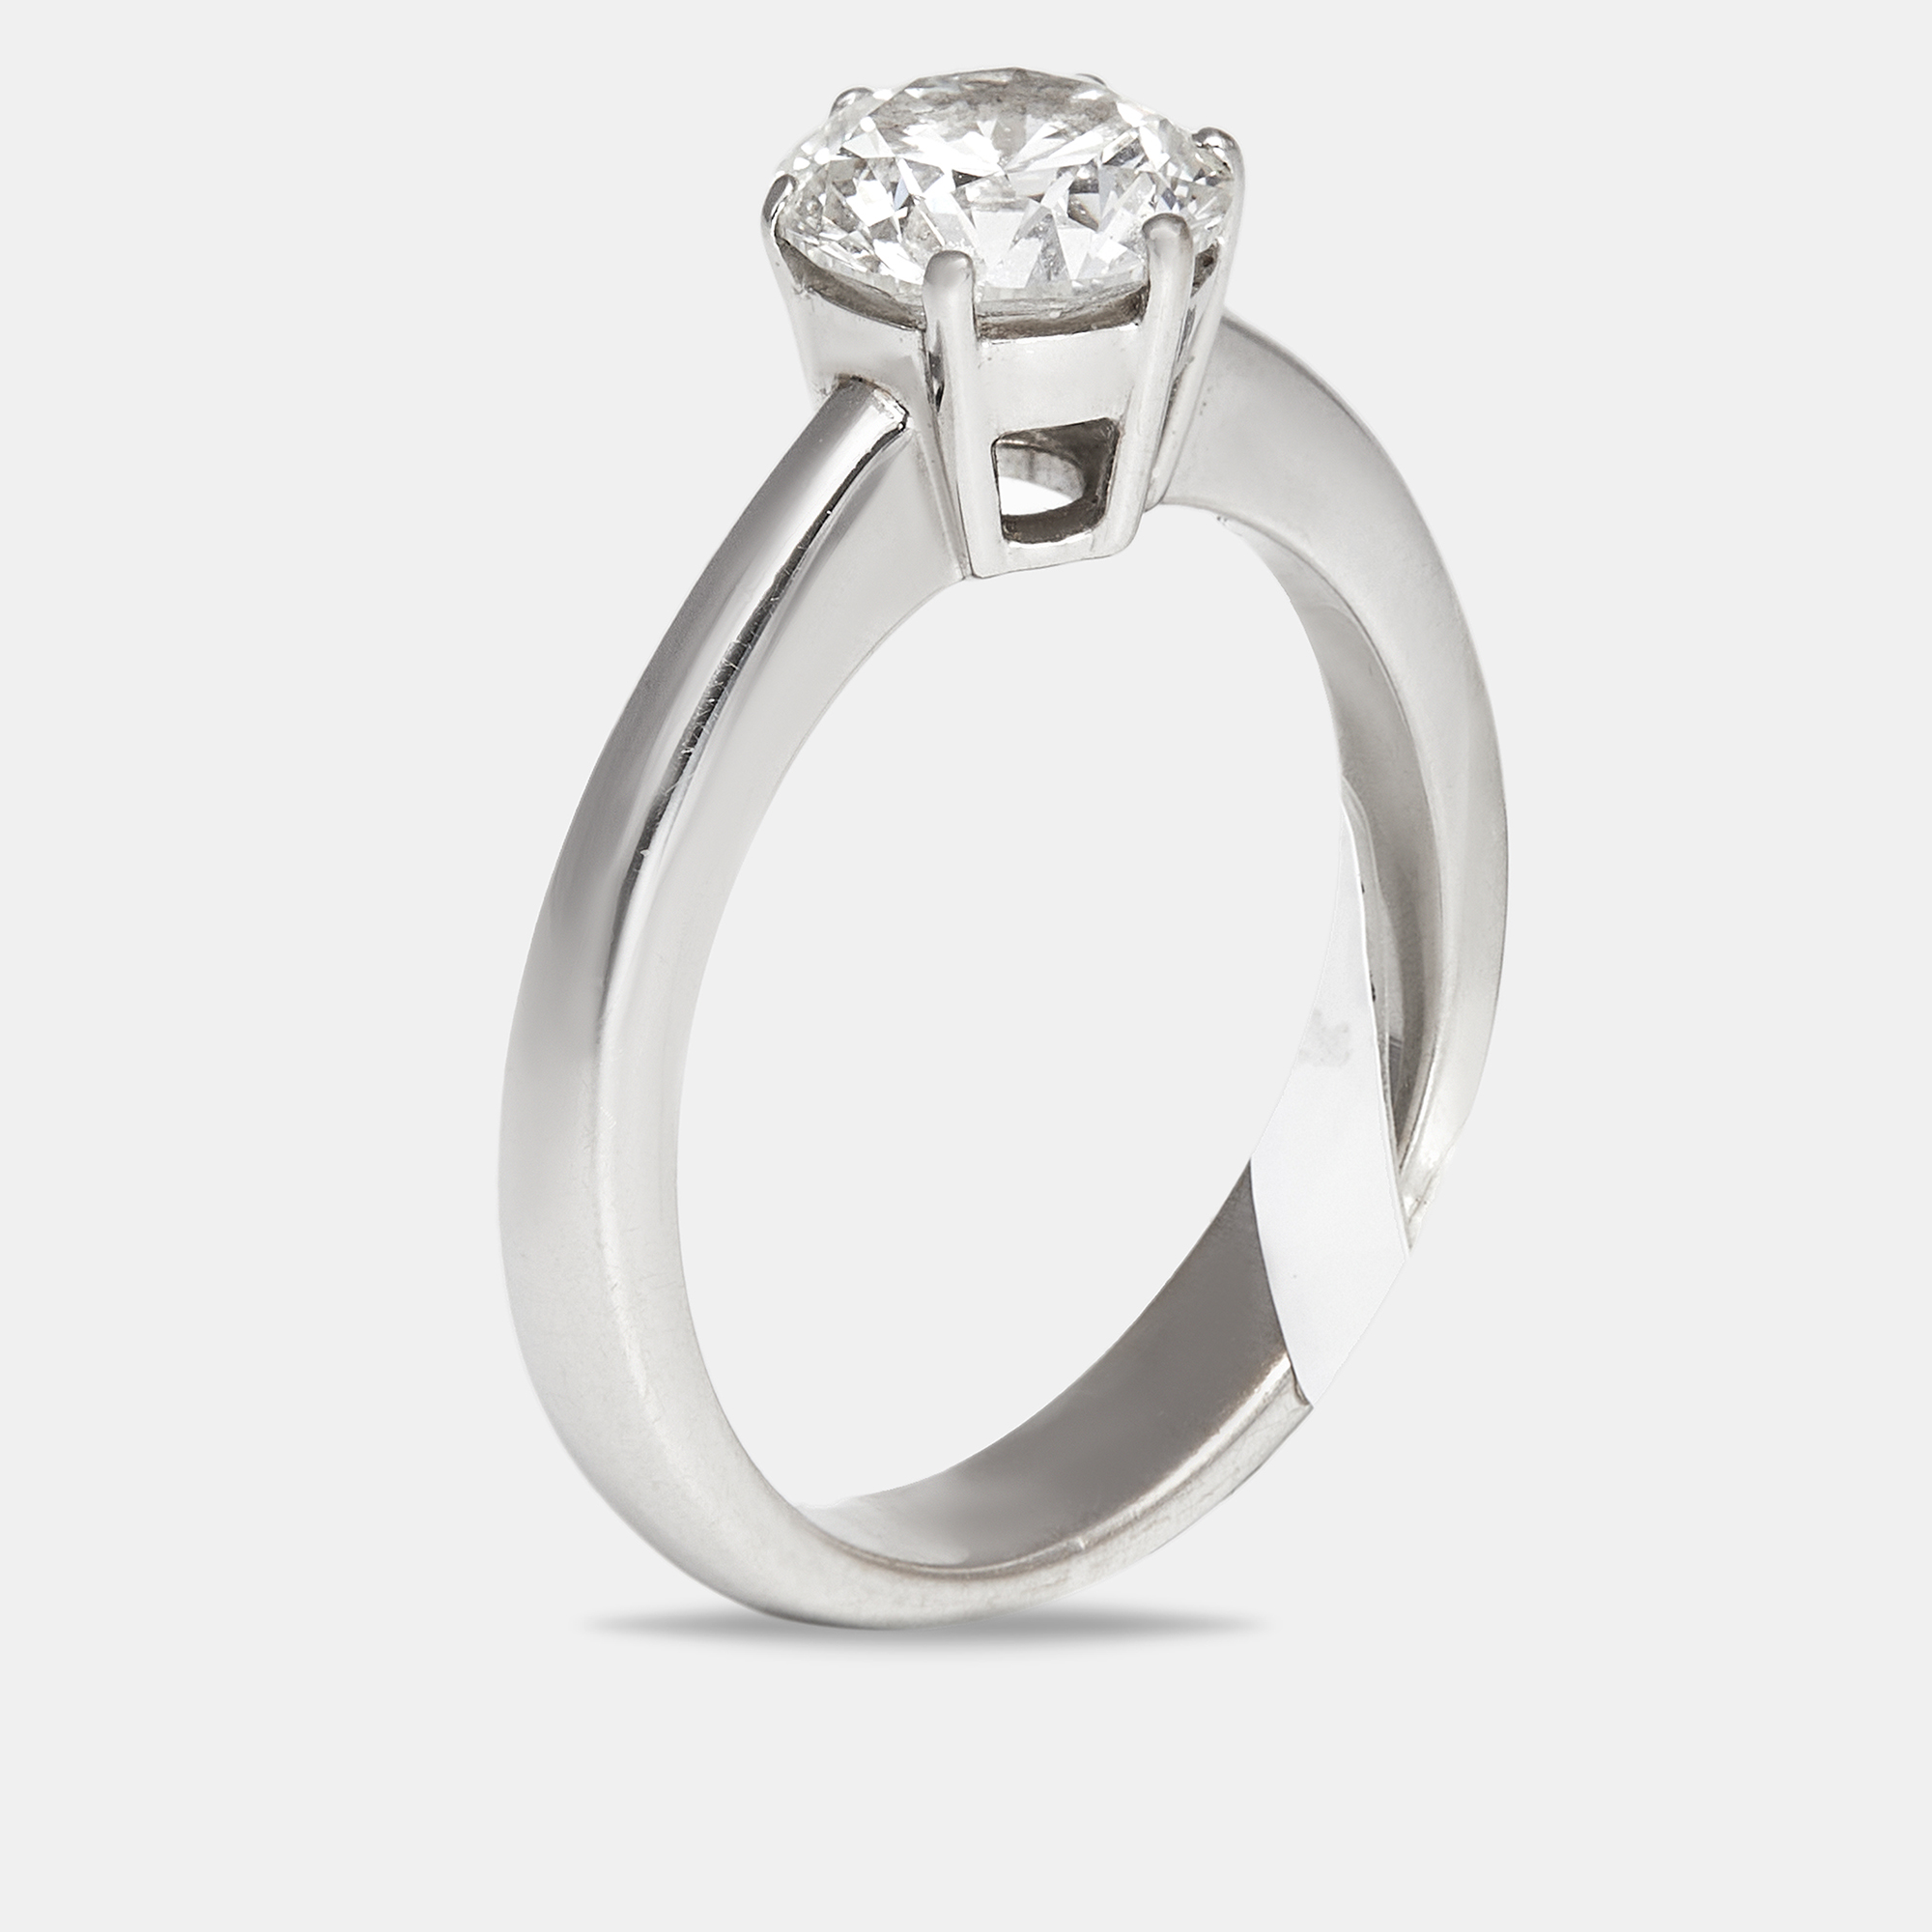 The diamond edit solitare diamond 1.02 ct 18k white gold wedding ring size 46